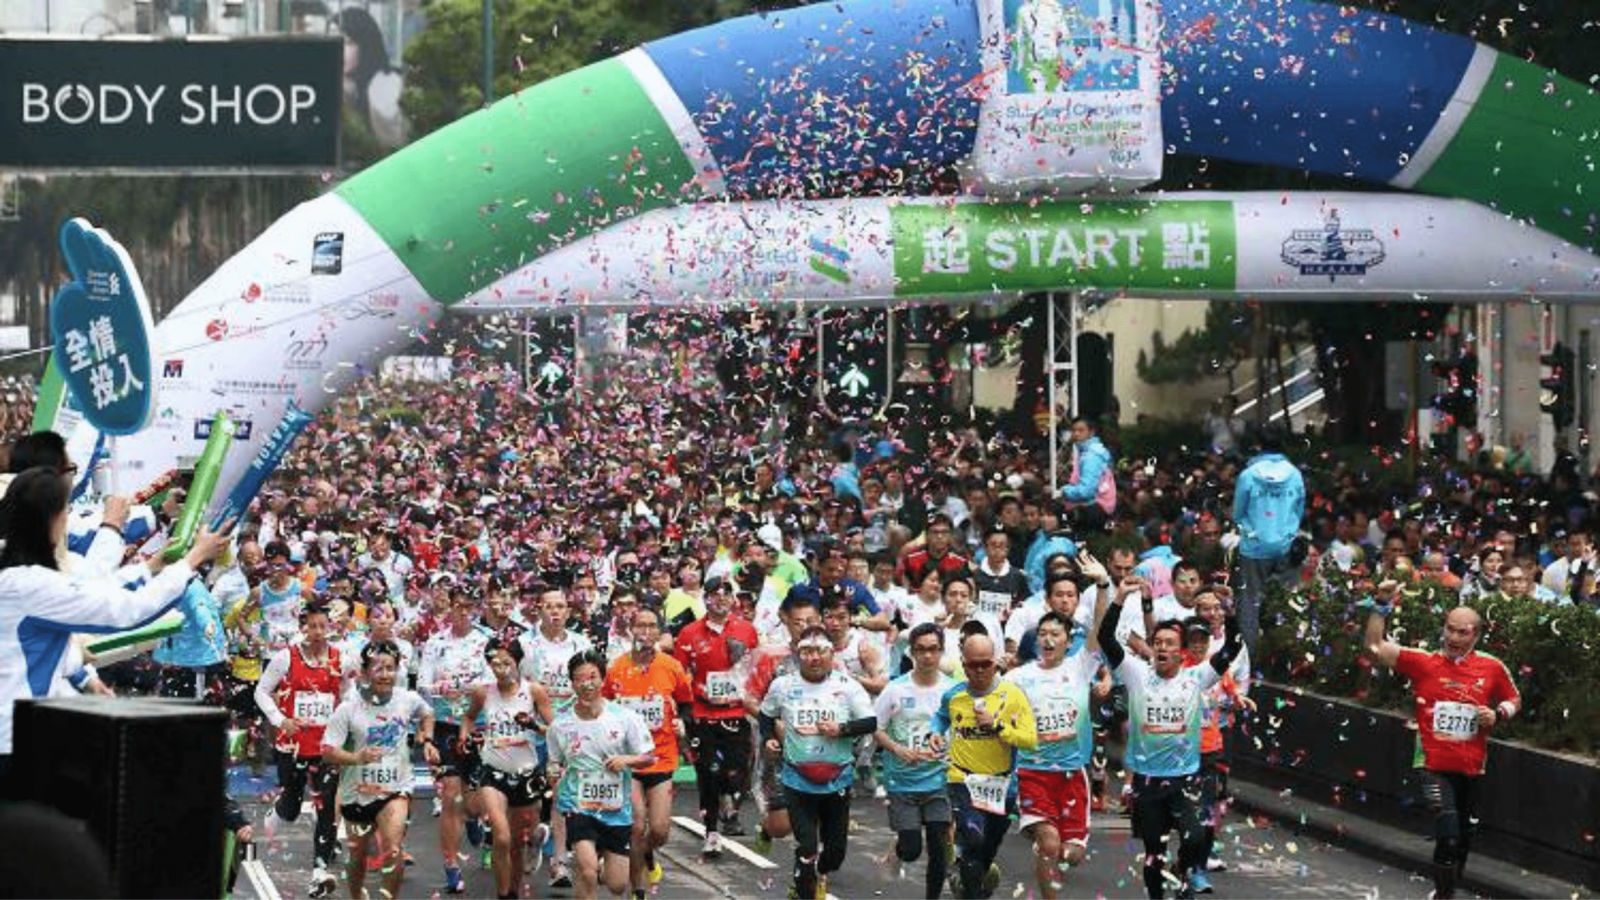 Nutritional planning: Luke Davey of Nu Performance talks strategy for the Hong Kong Marathon